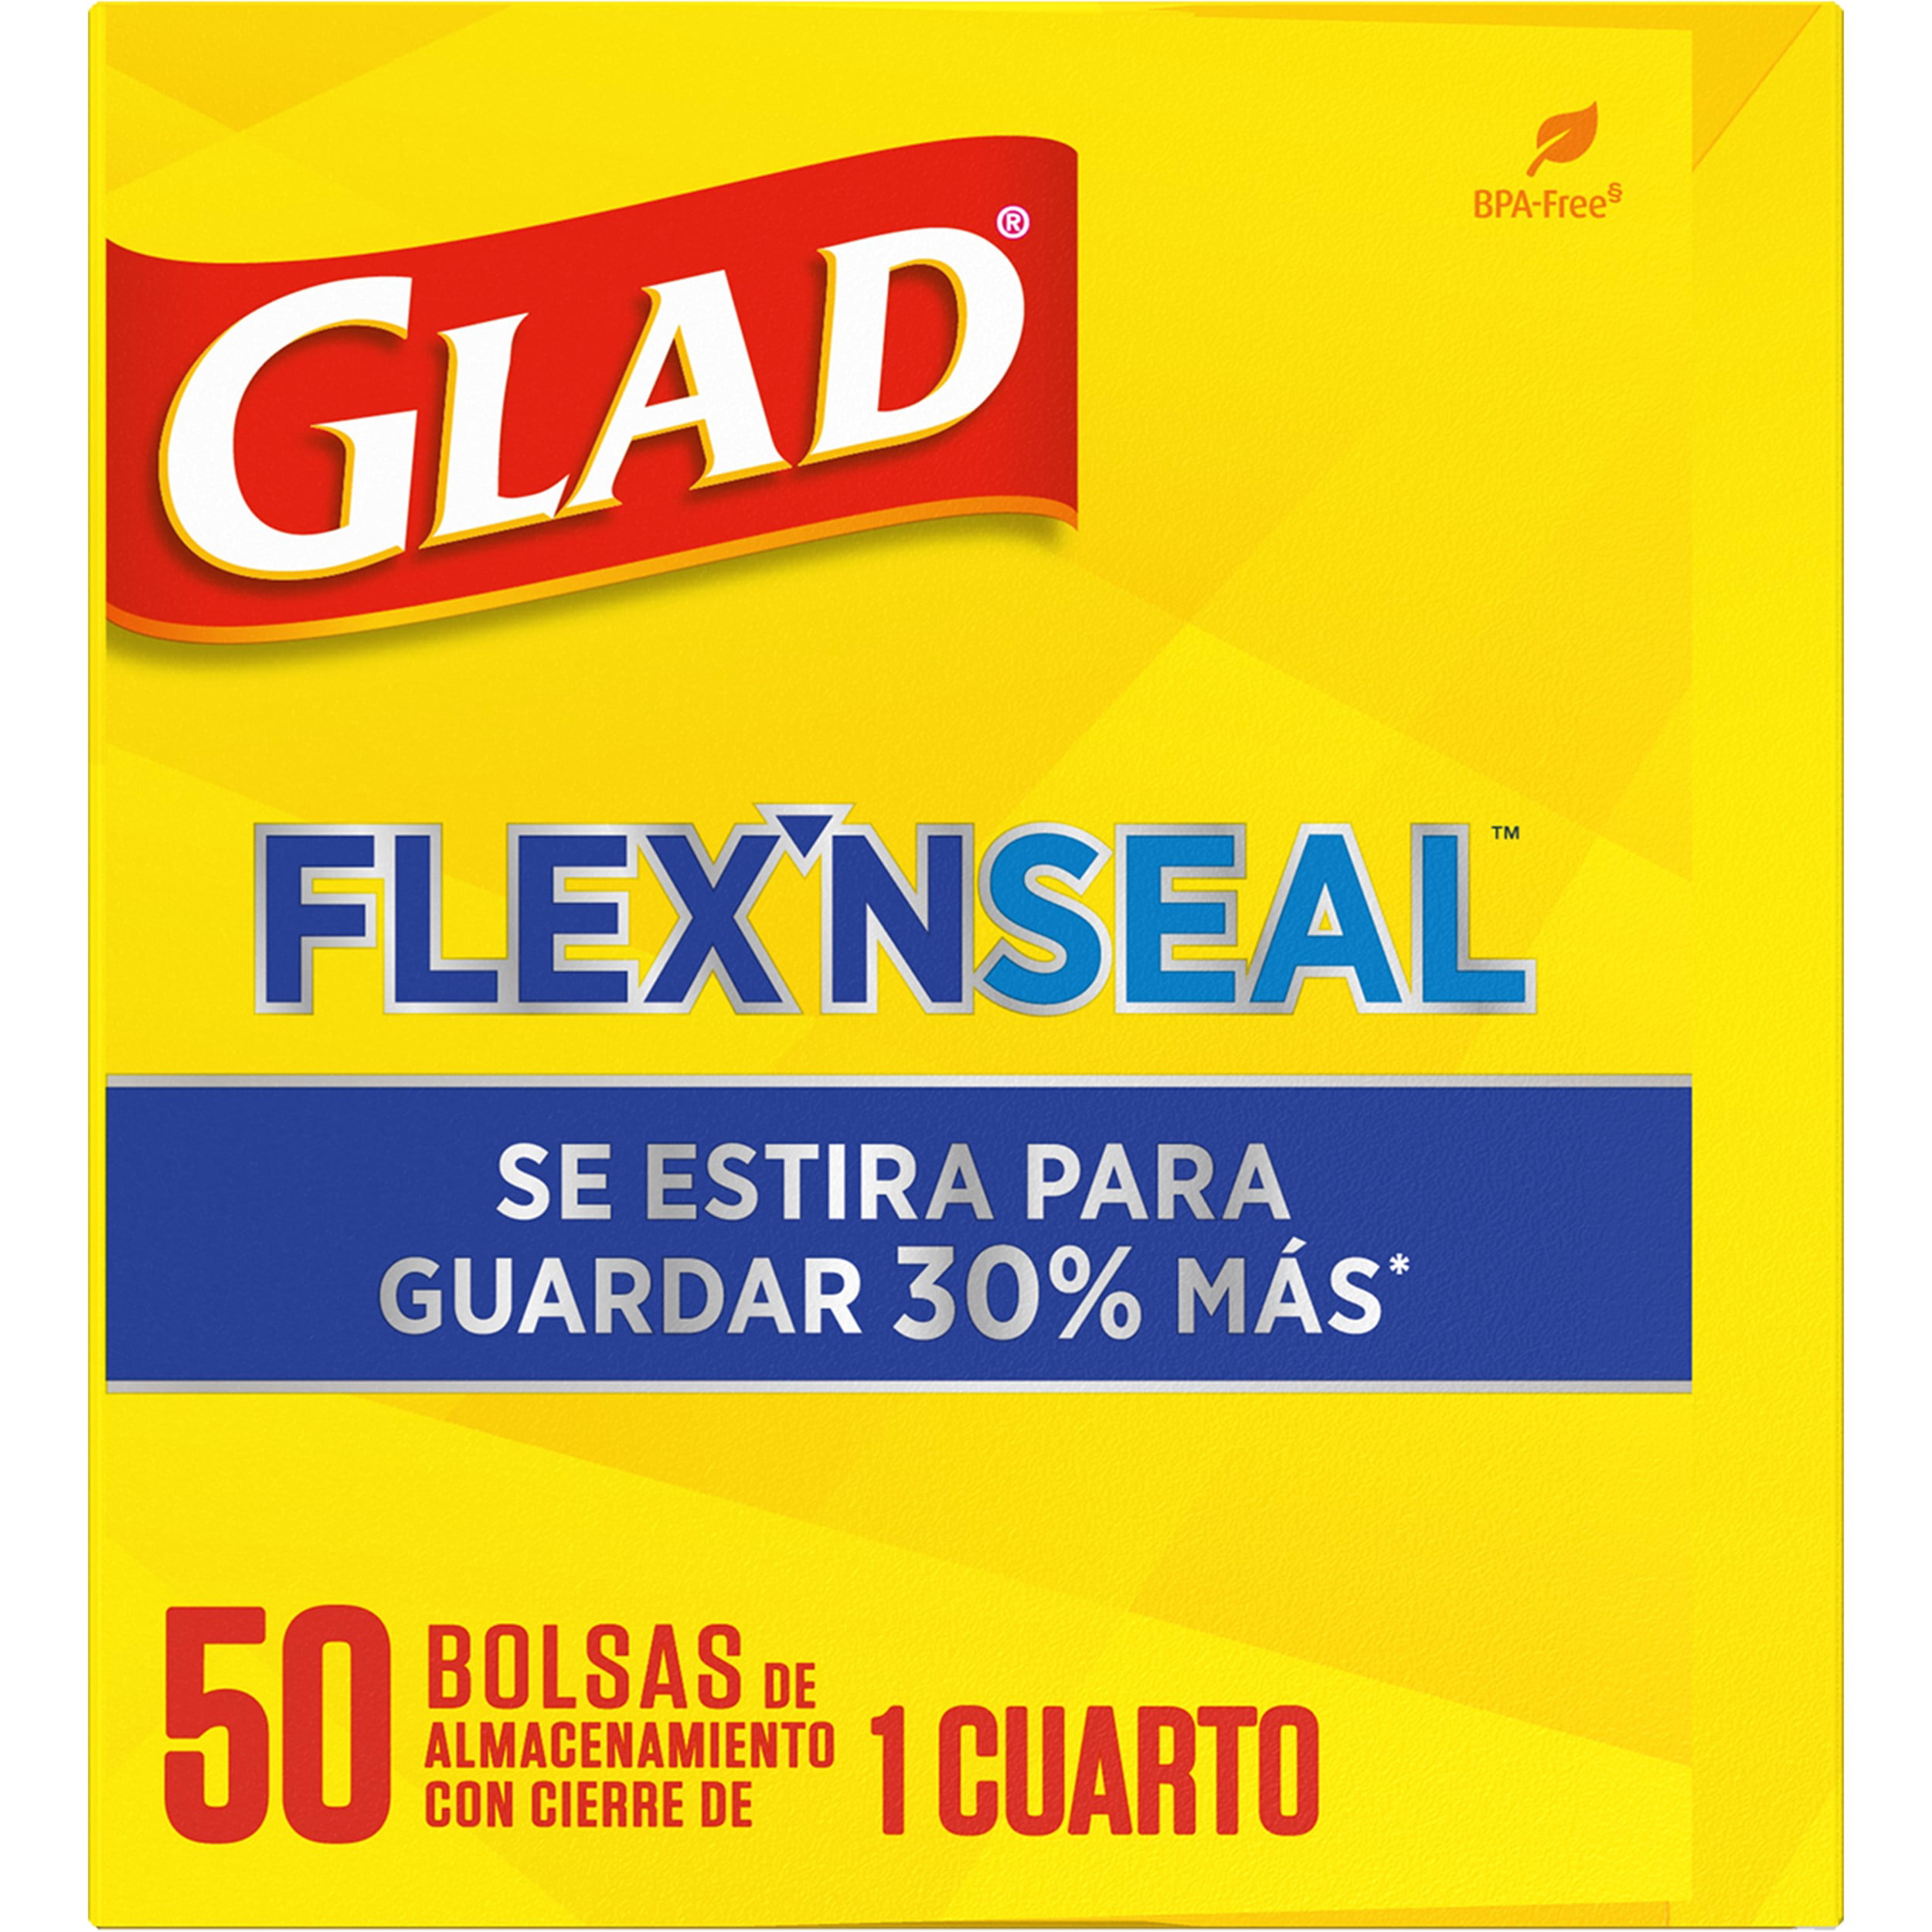 Glad Flex N Seal Food Storage Bags, Quart, 8 Ct.